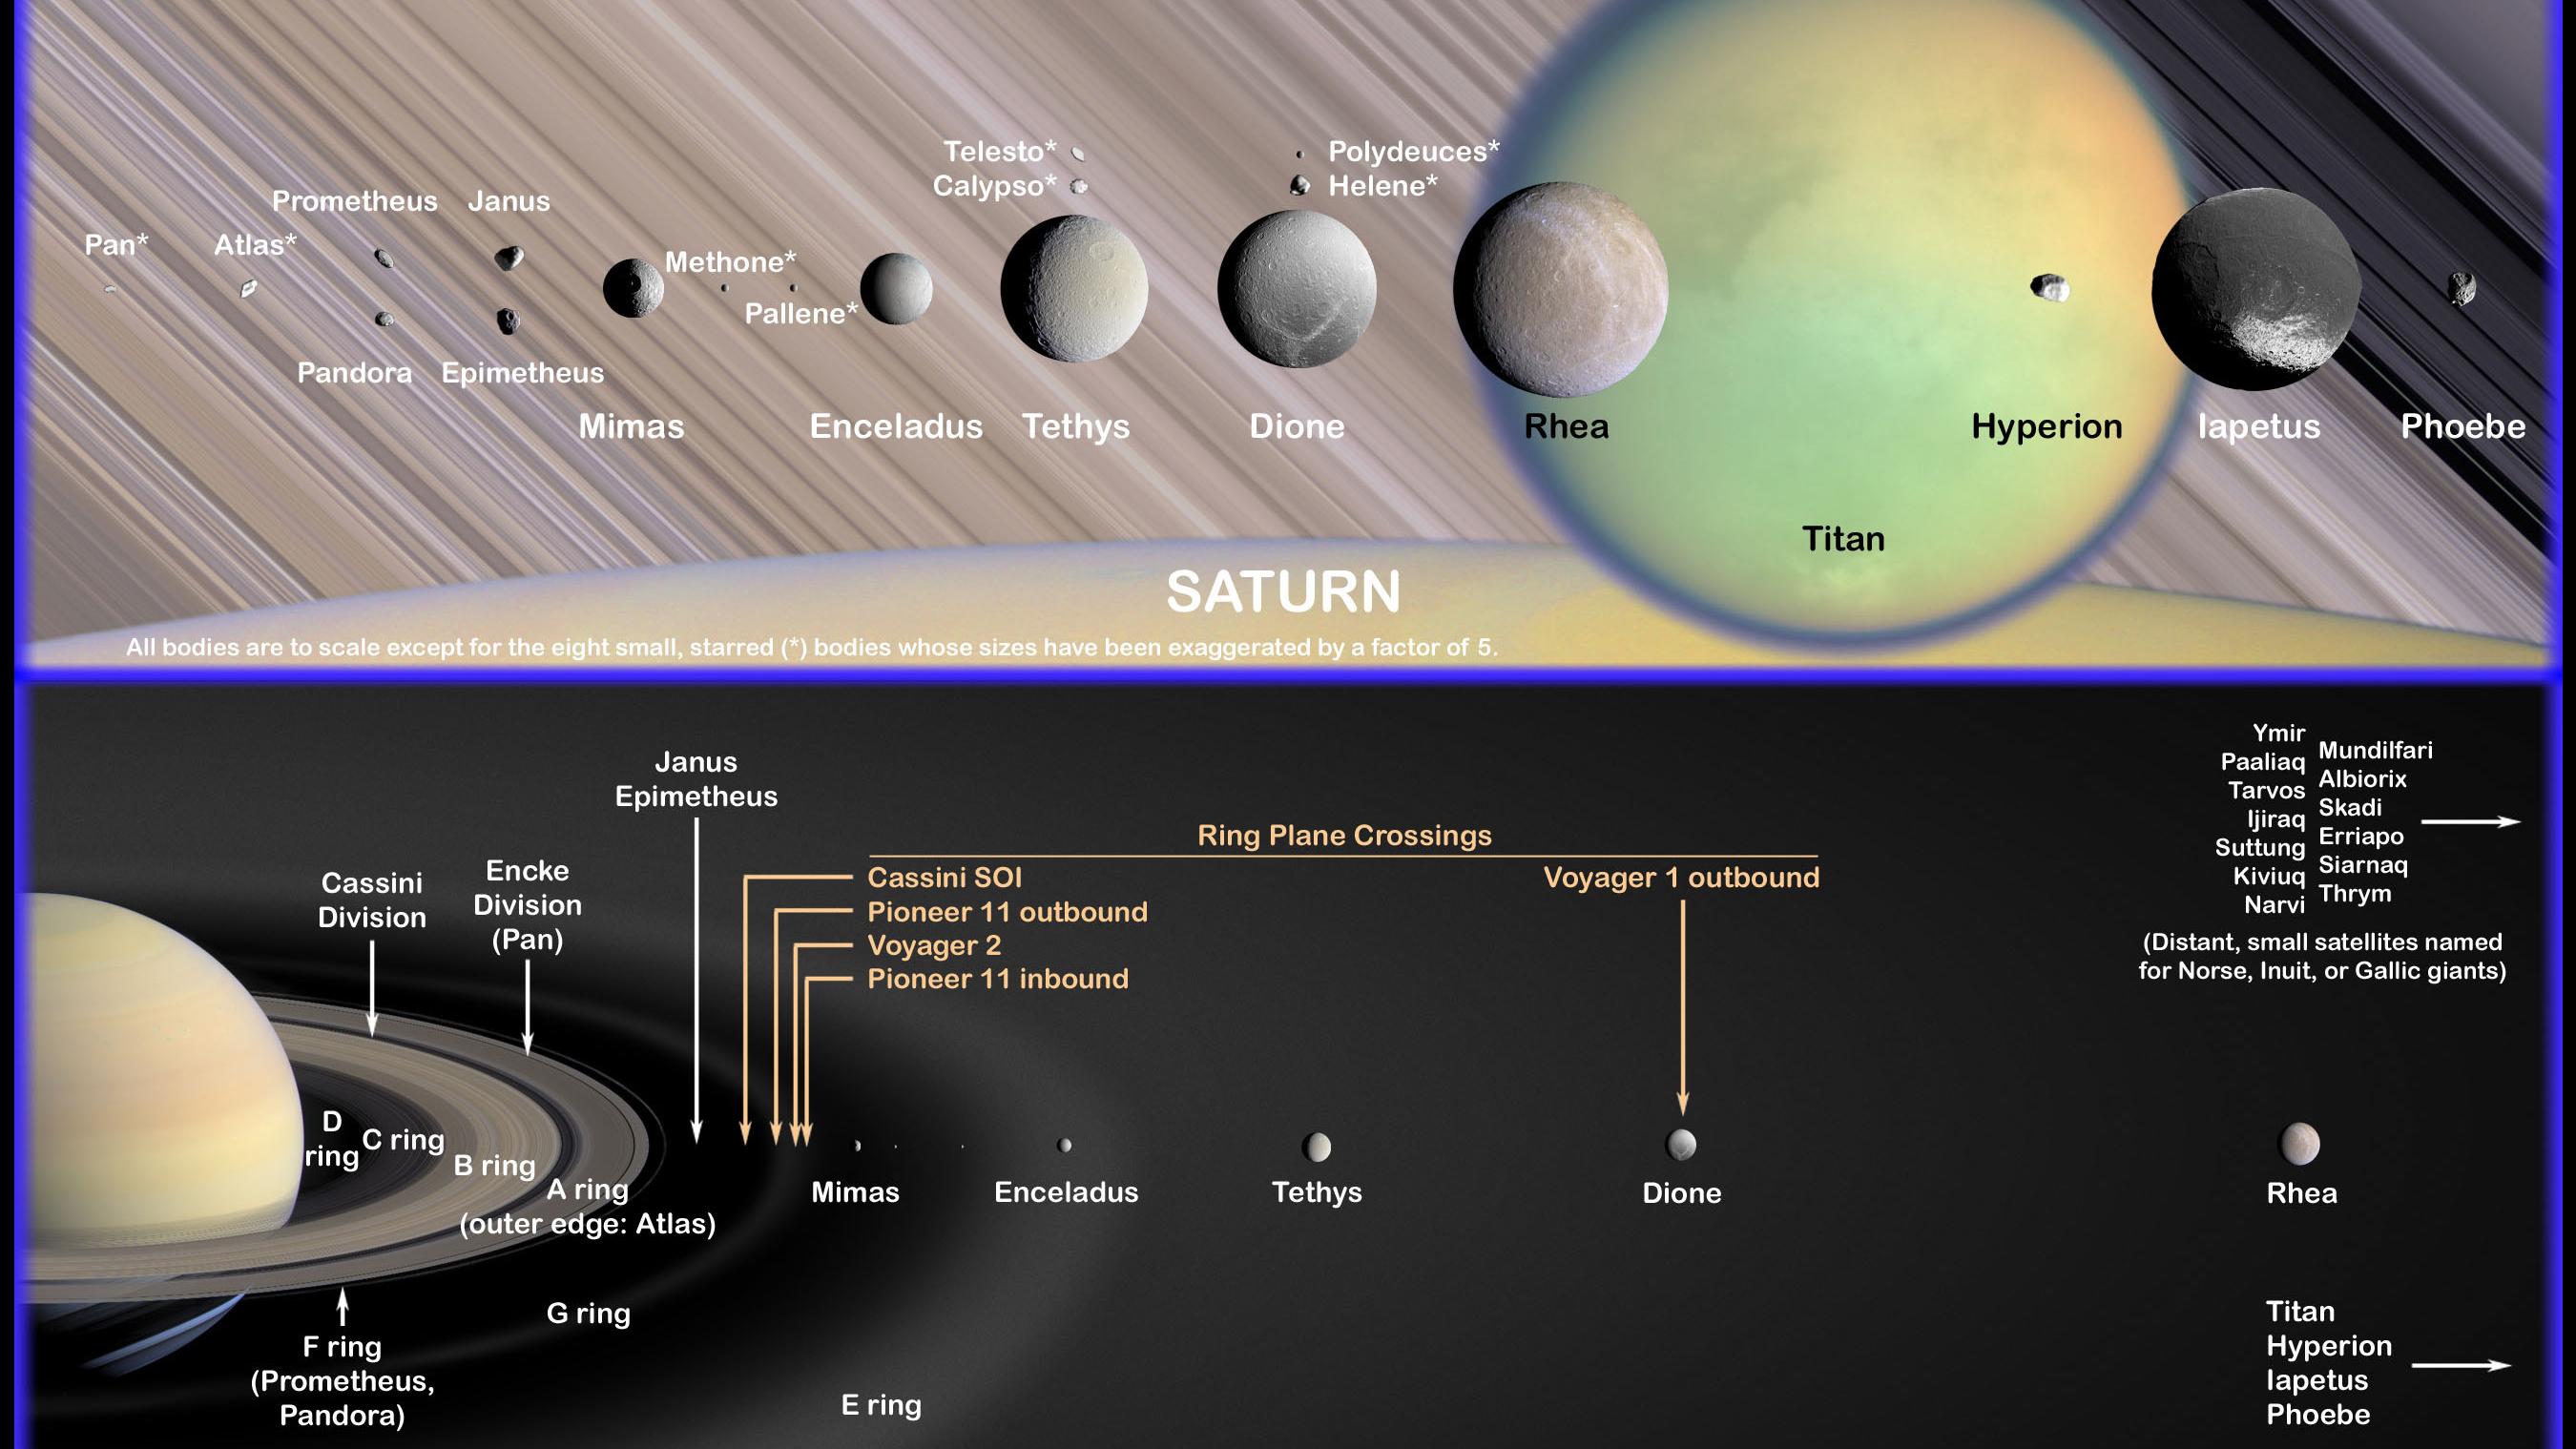 DLR - The 21 largest satellites of Saturn